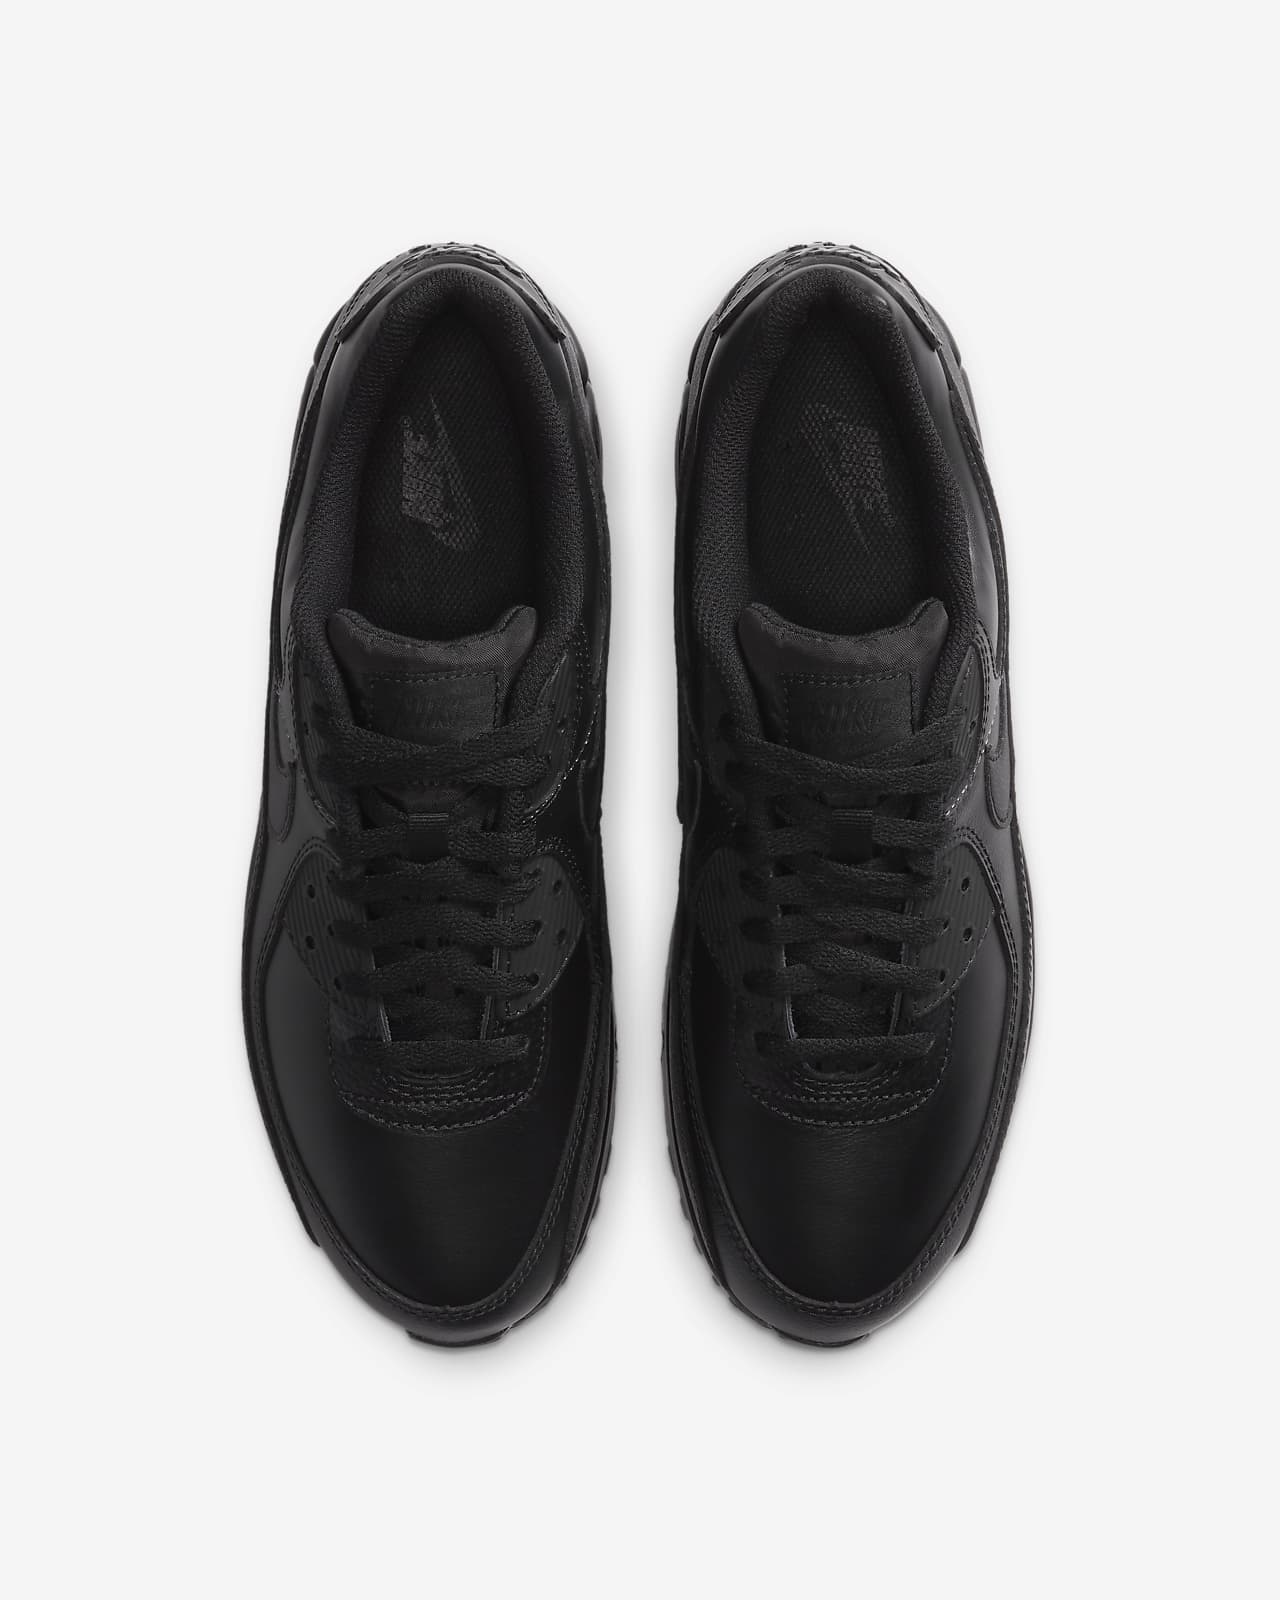 adidas Swift Run 1.0 Shoes - Black | Men's Lifestyle | adidas US